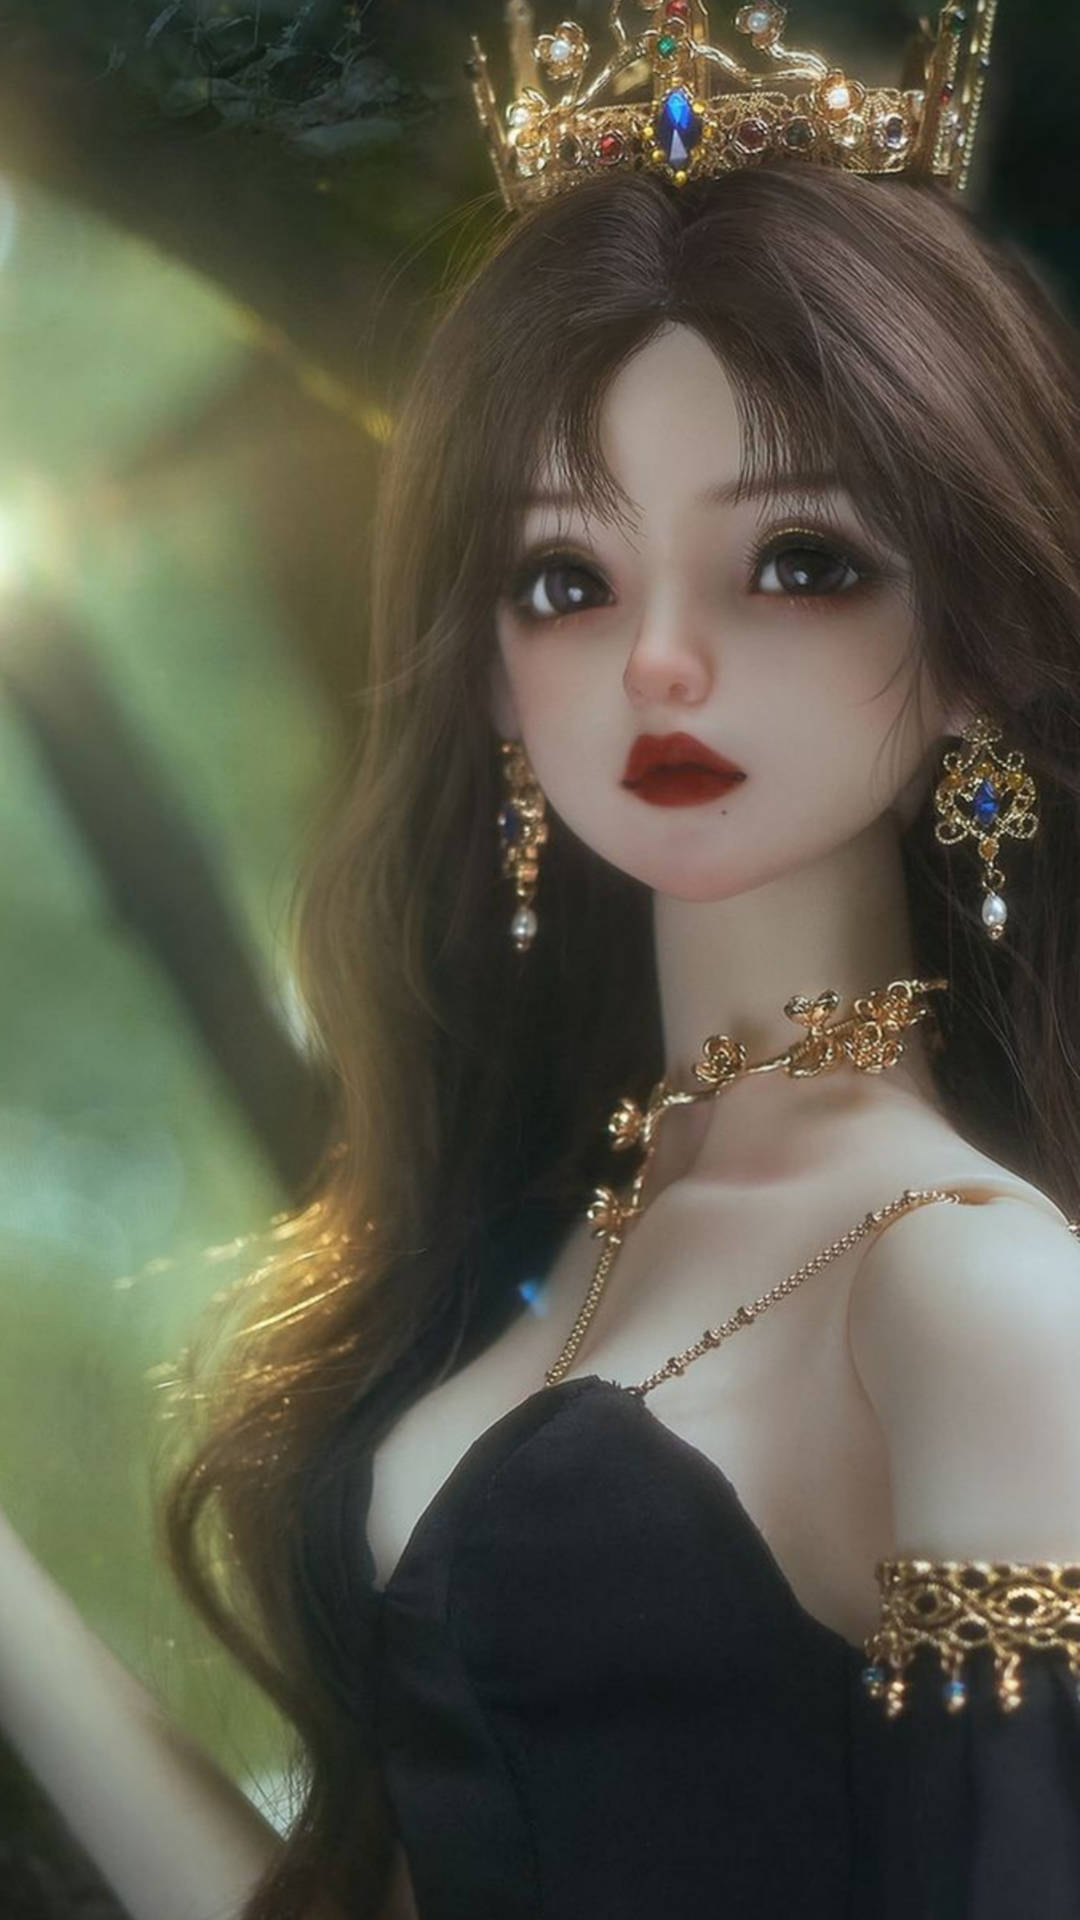 Elegant Barbie in Classy Black Dress Wallpaper